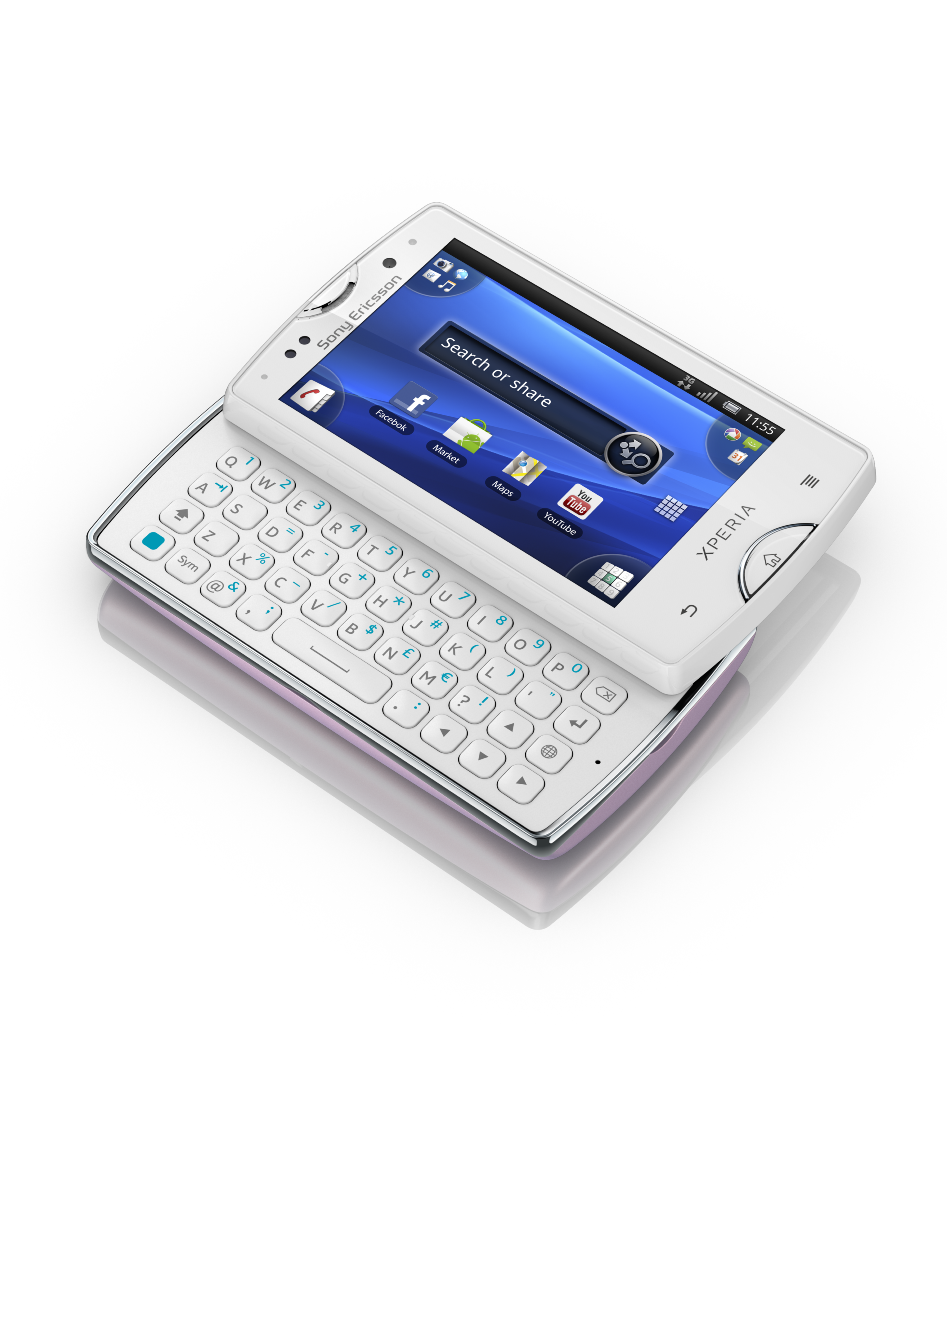 Sony Xperia Mini Pro. Sony Ericsson Xperia Mini. Sony Ericsson Xperia Mini Pro. Xperia Pro 1.